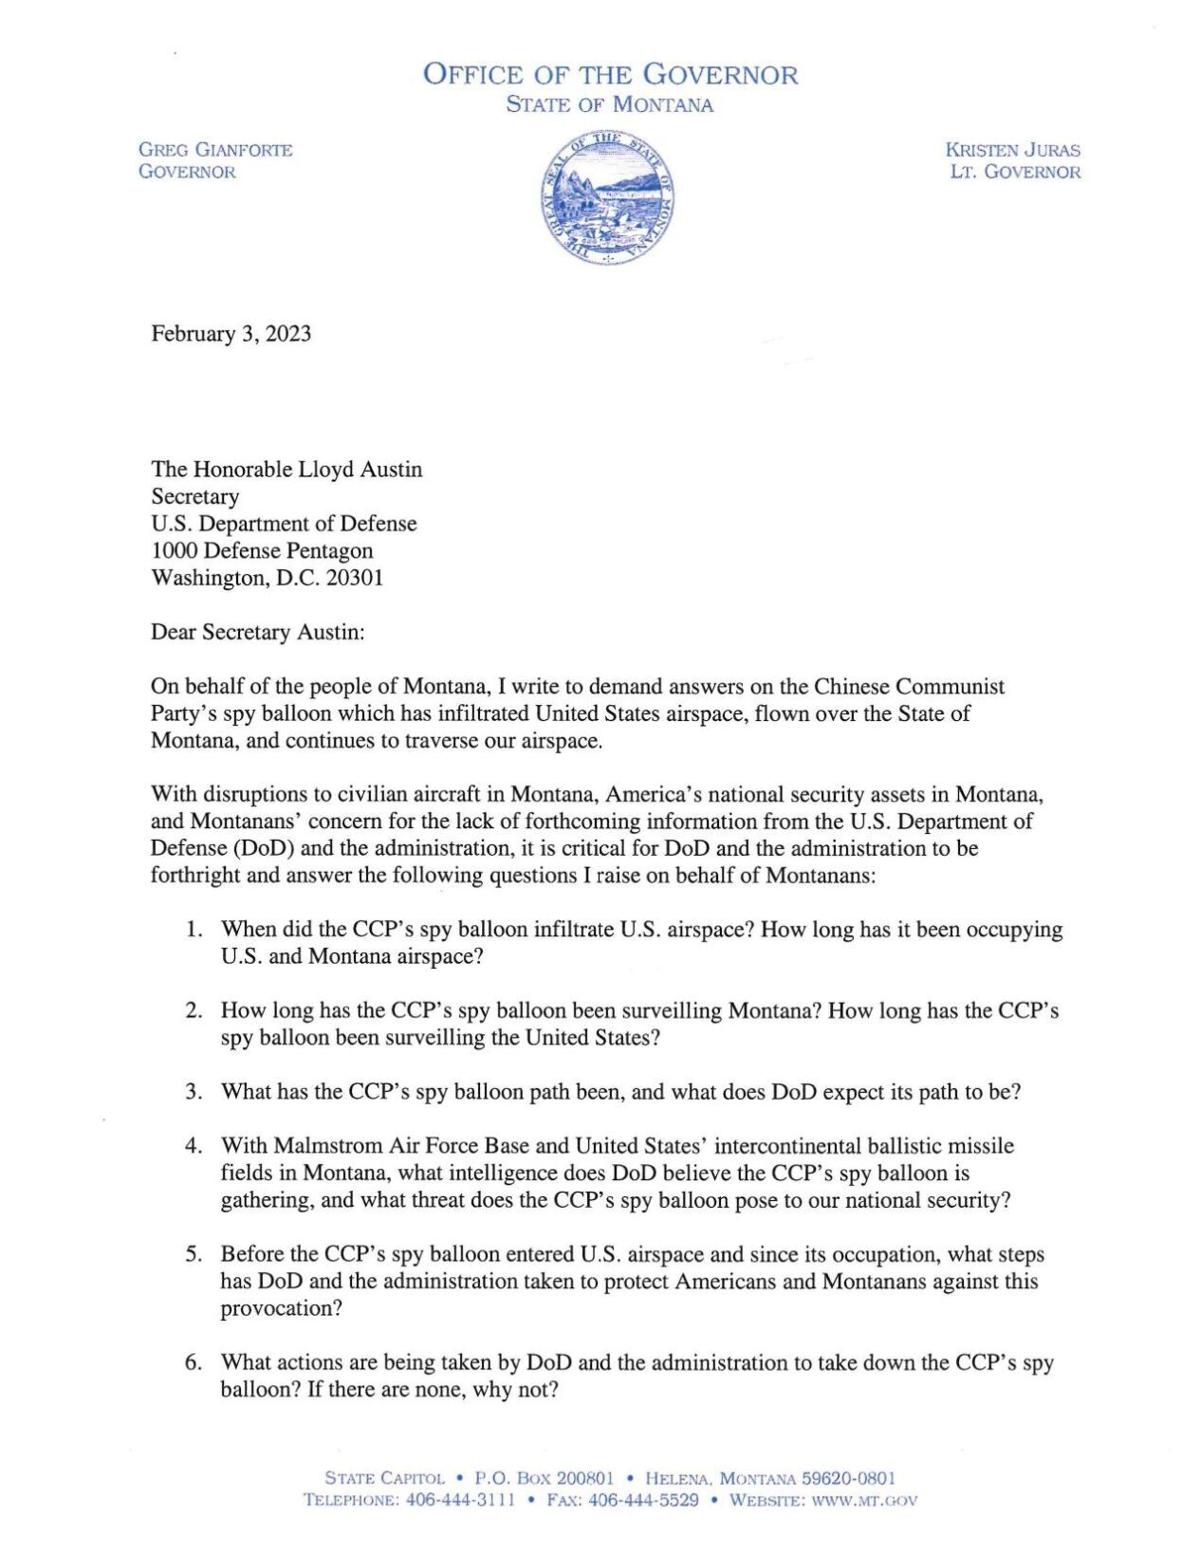 Governor Gianforte letter to Secretary of Defense Austin